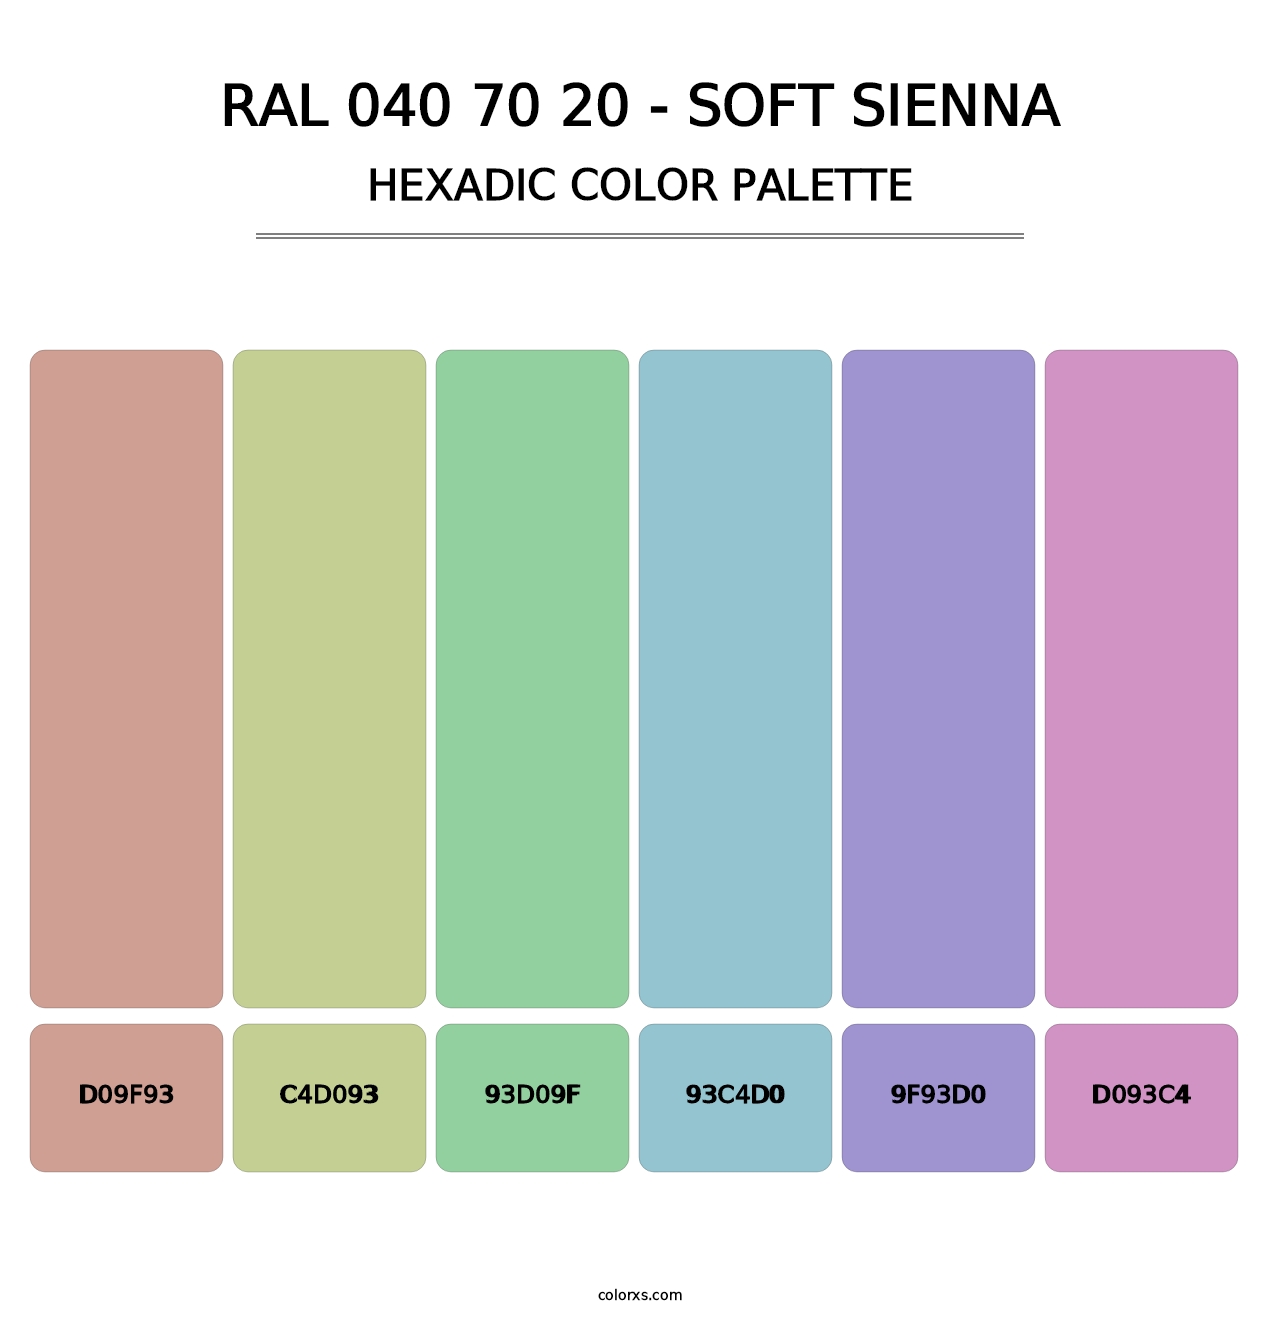 RAL 040 70 20 - Soft Sienna - Hexadic Color Palette